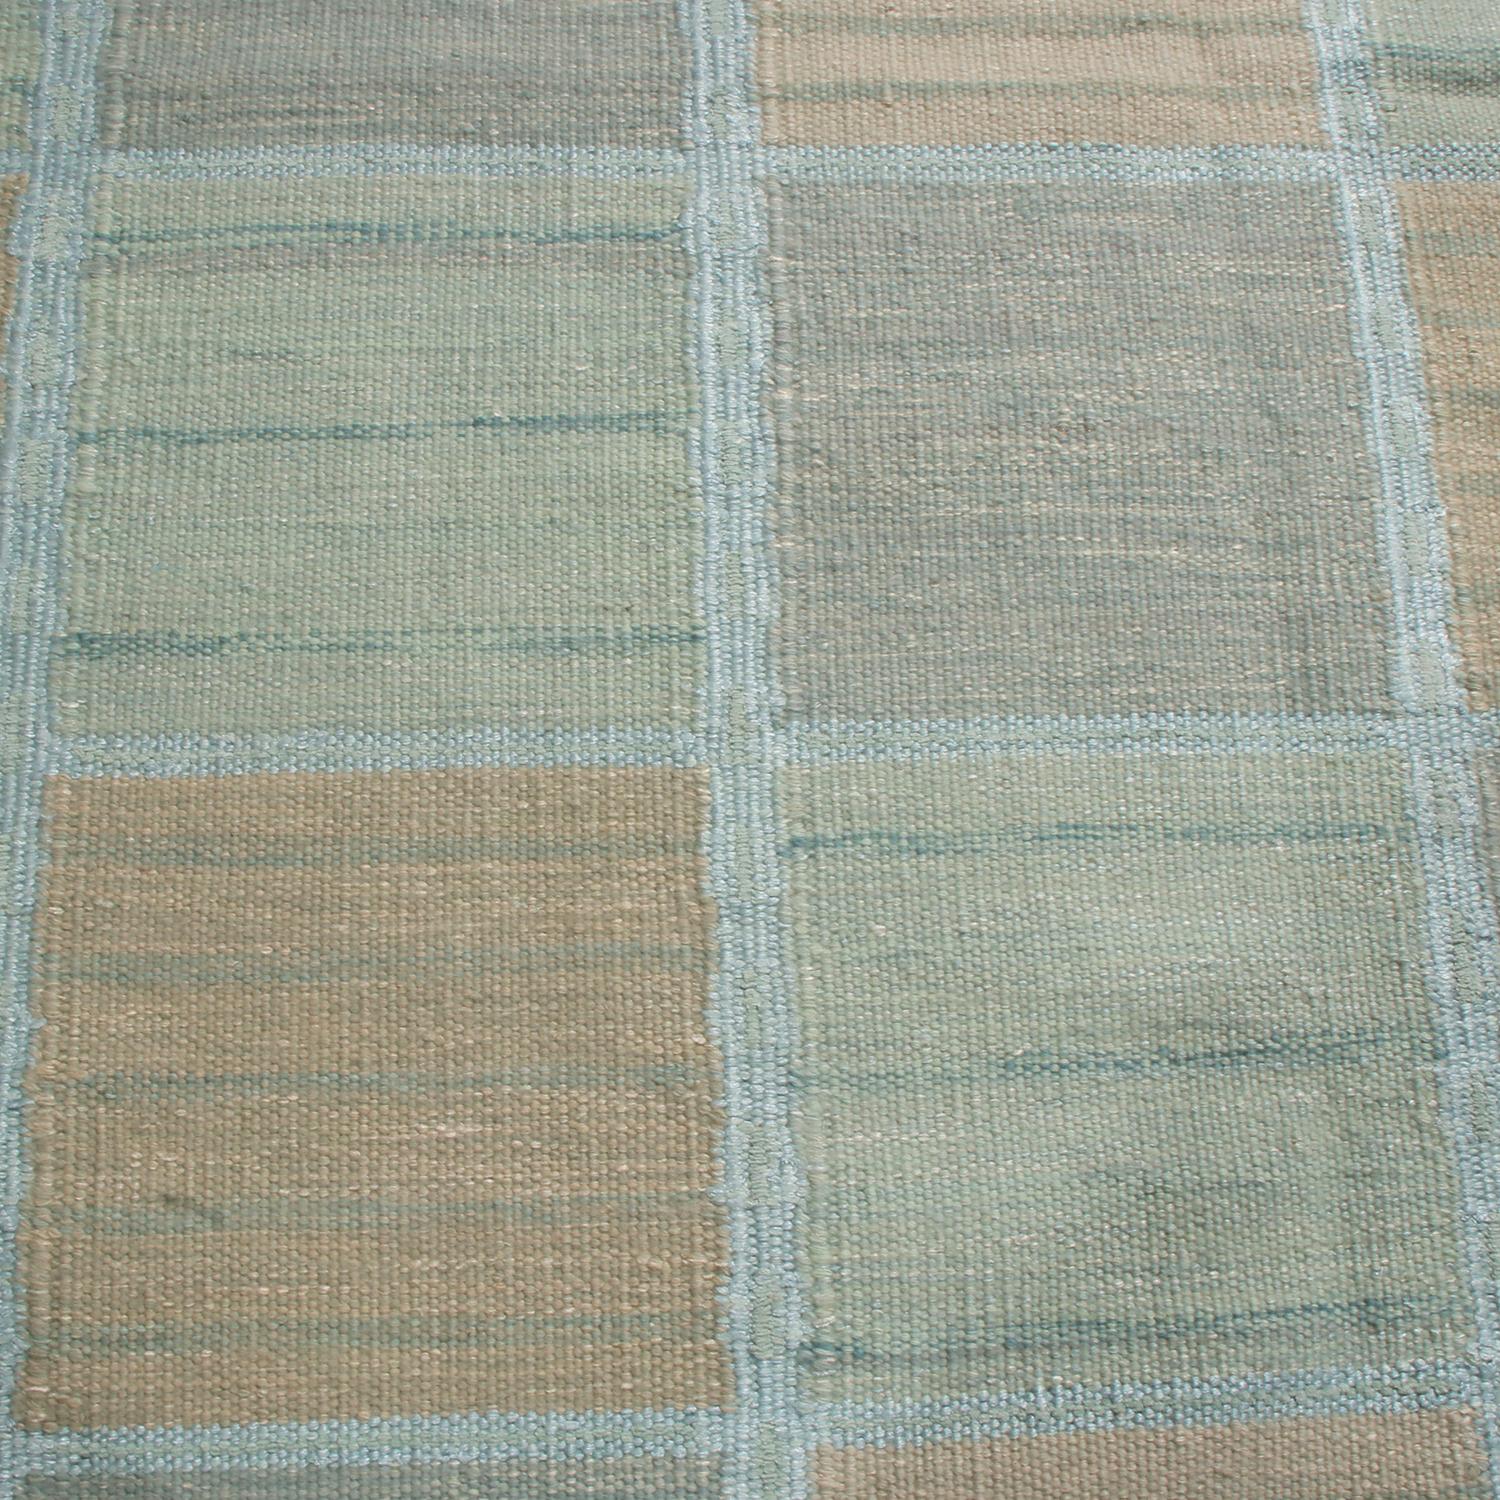 Scandinavian Modern Rug & Kilim’s Scandinavian-Inspired Brown and Seafoam Blue Wool Pile Rug